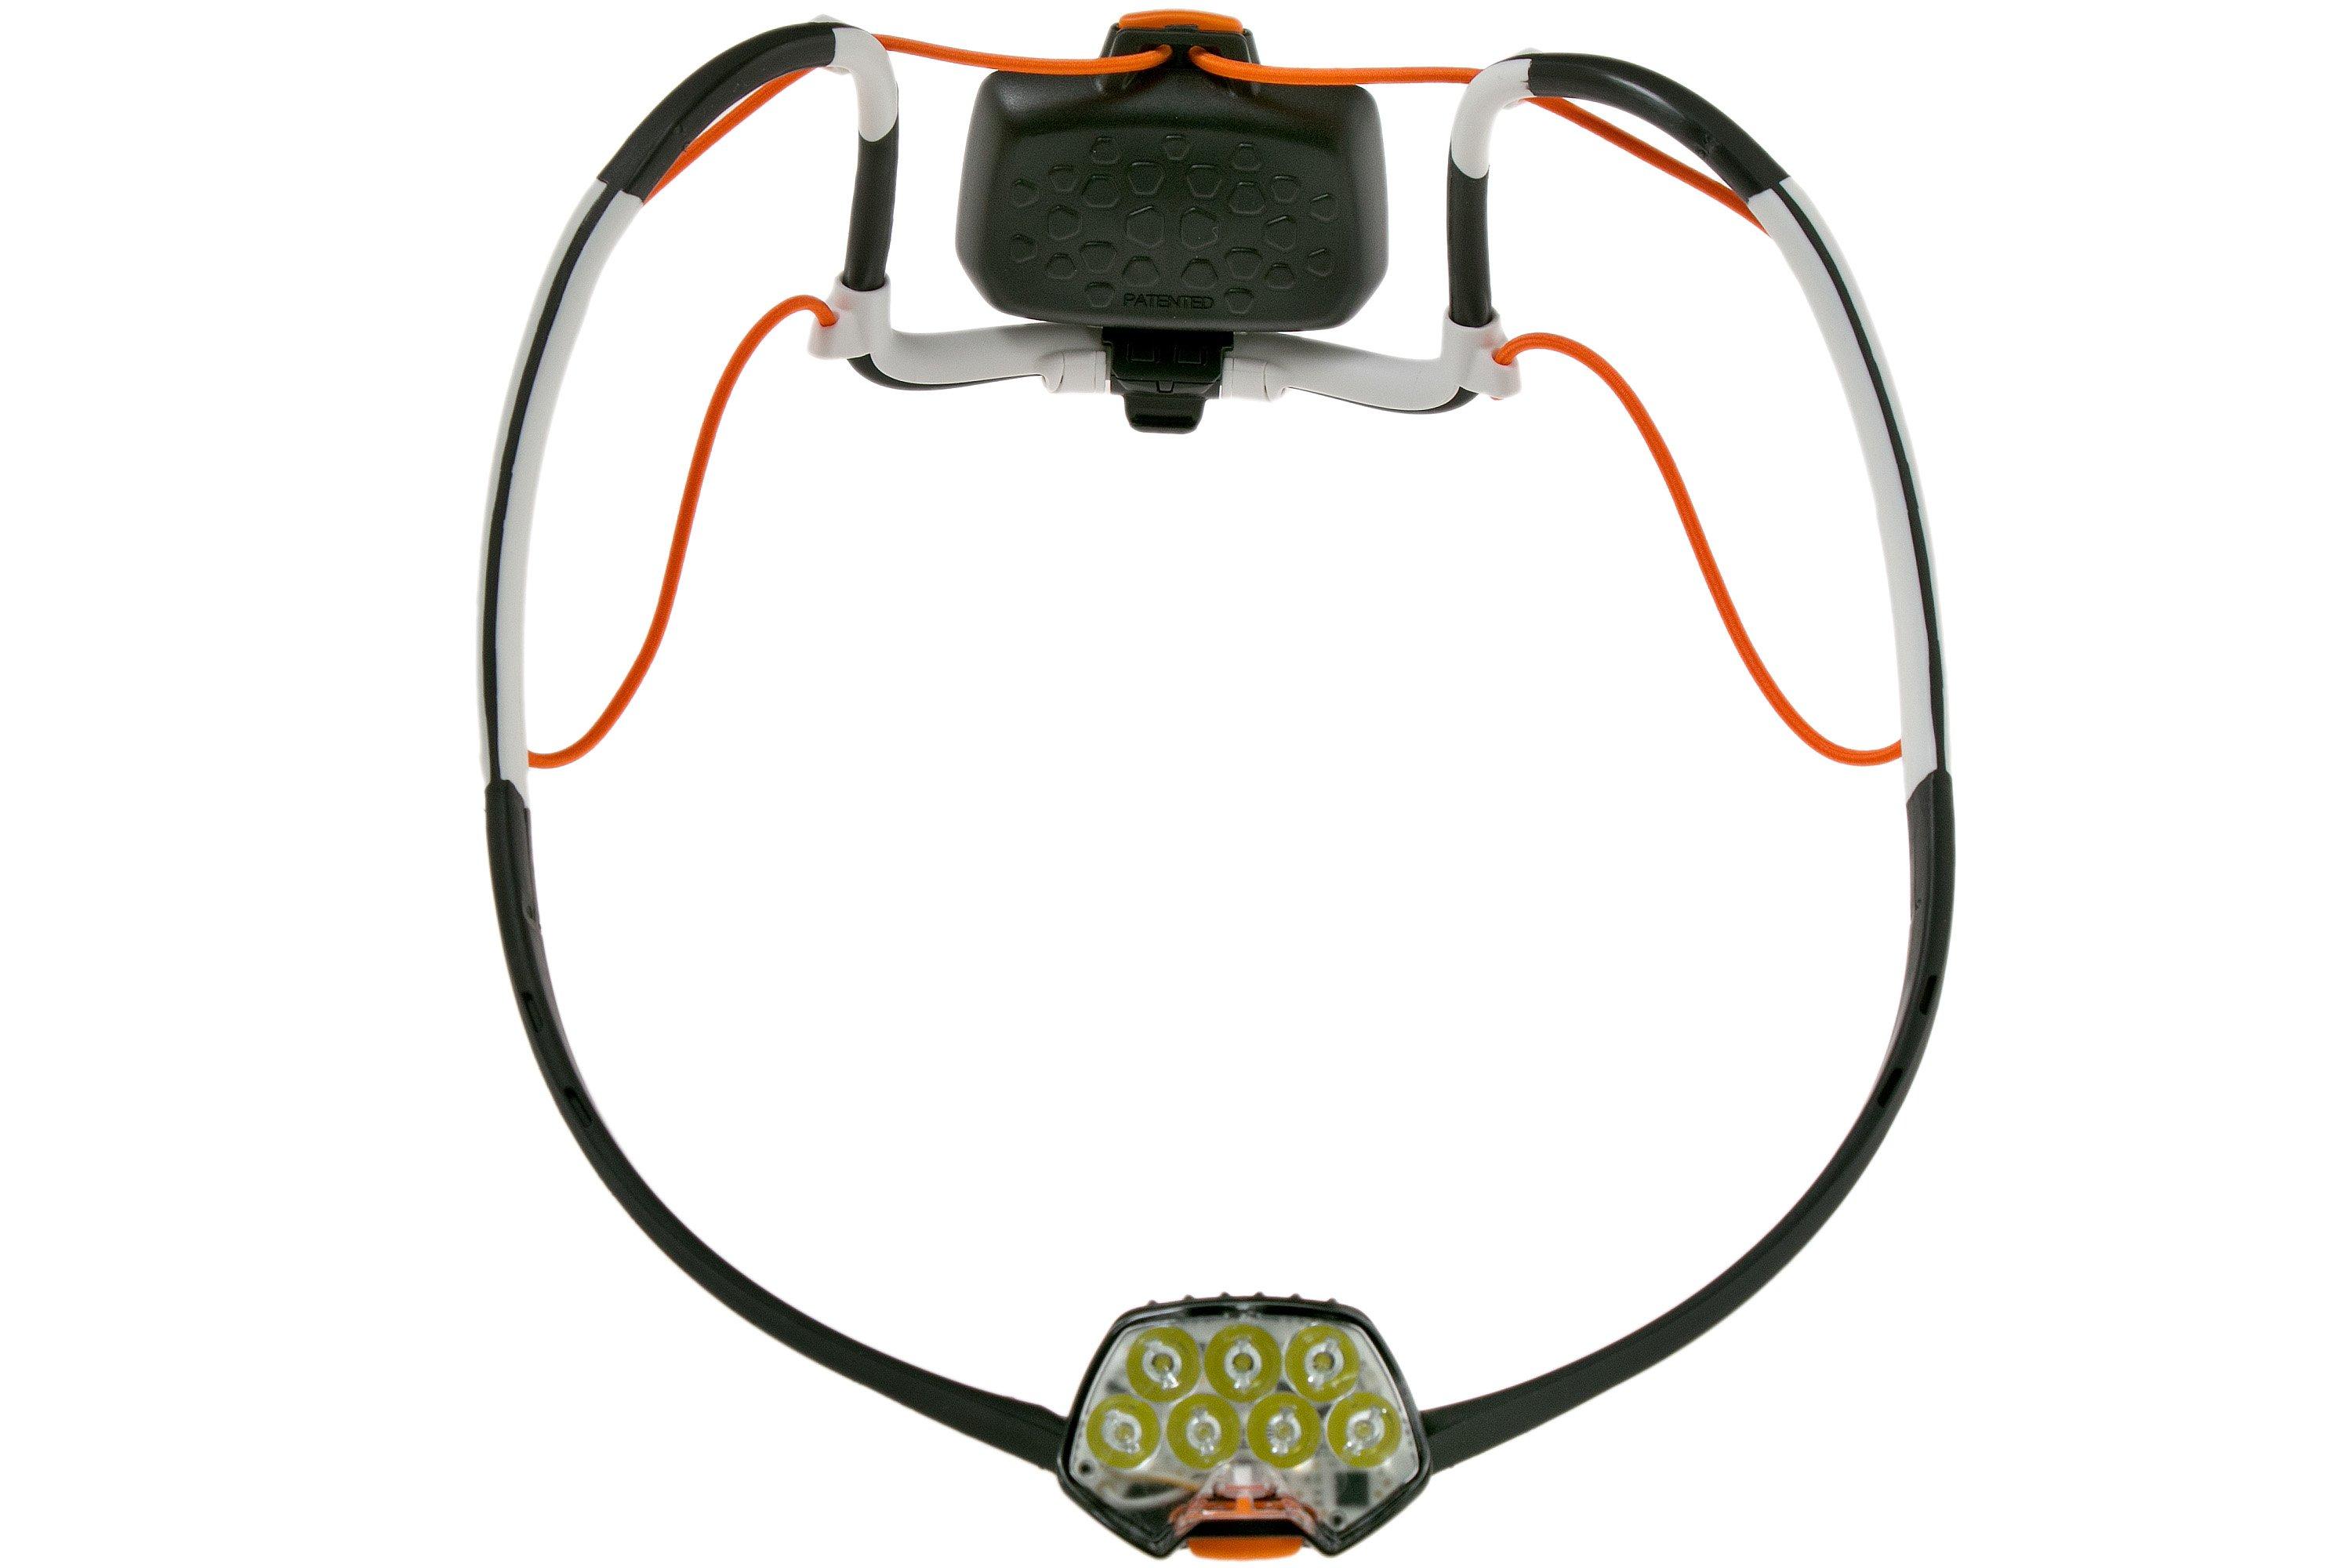 Petzl IKO CORE - Lampe frontale rechargeable de 500 lumens